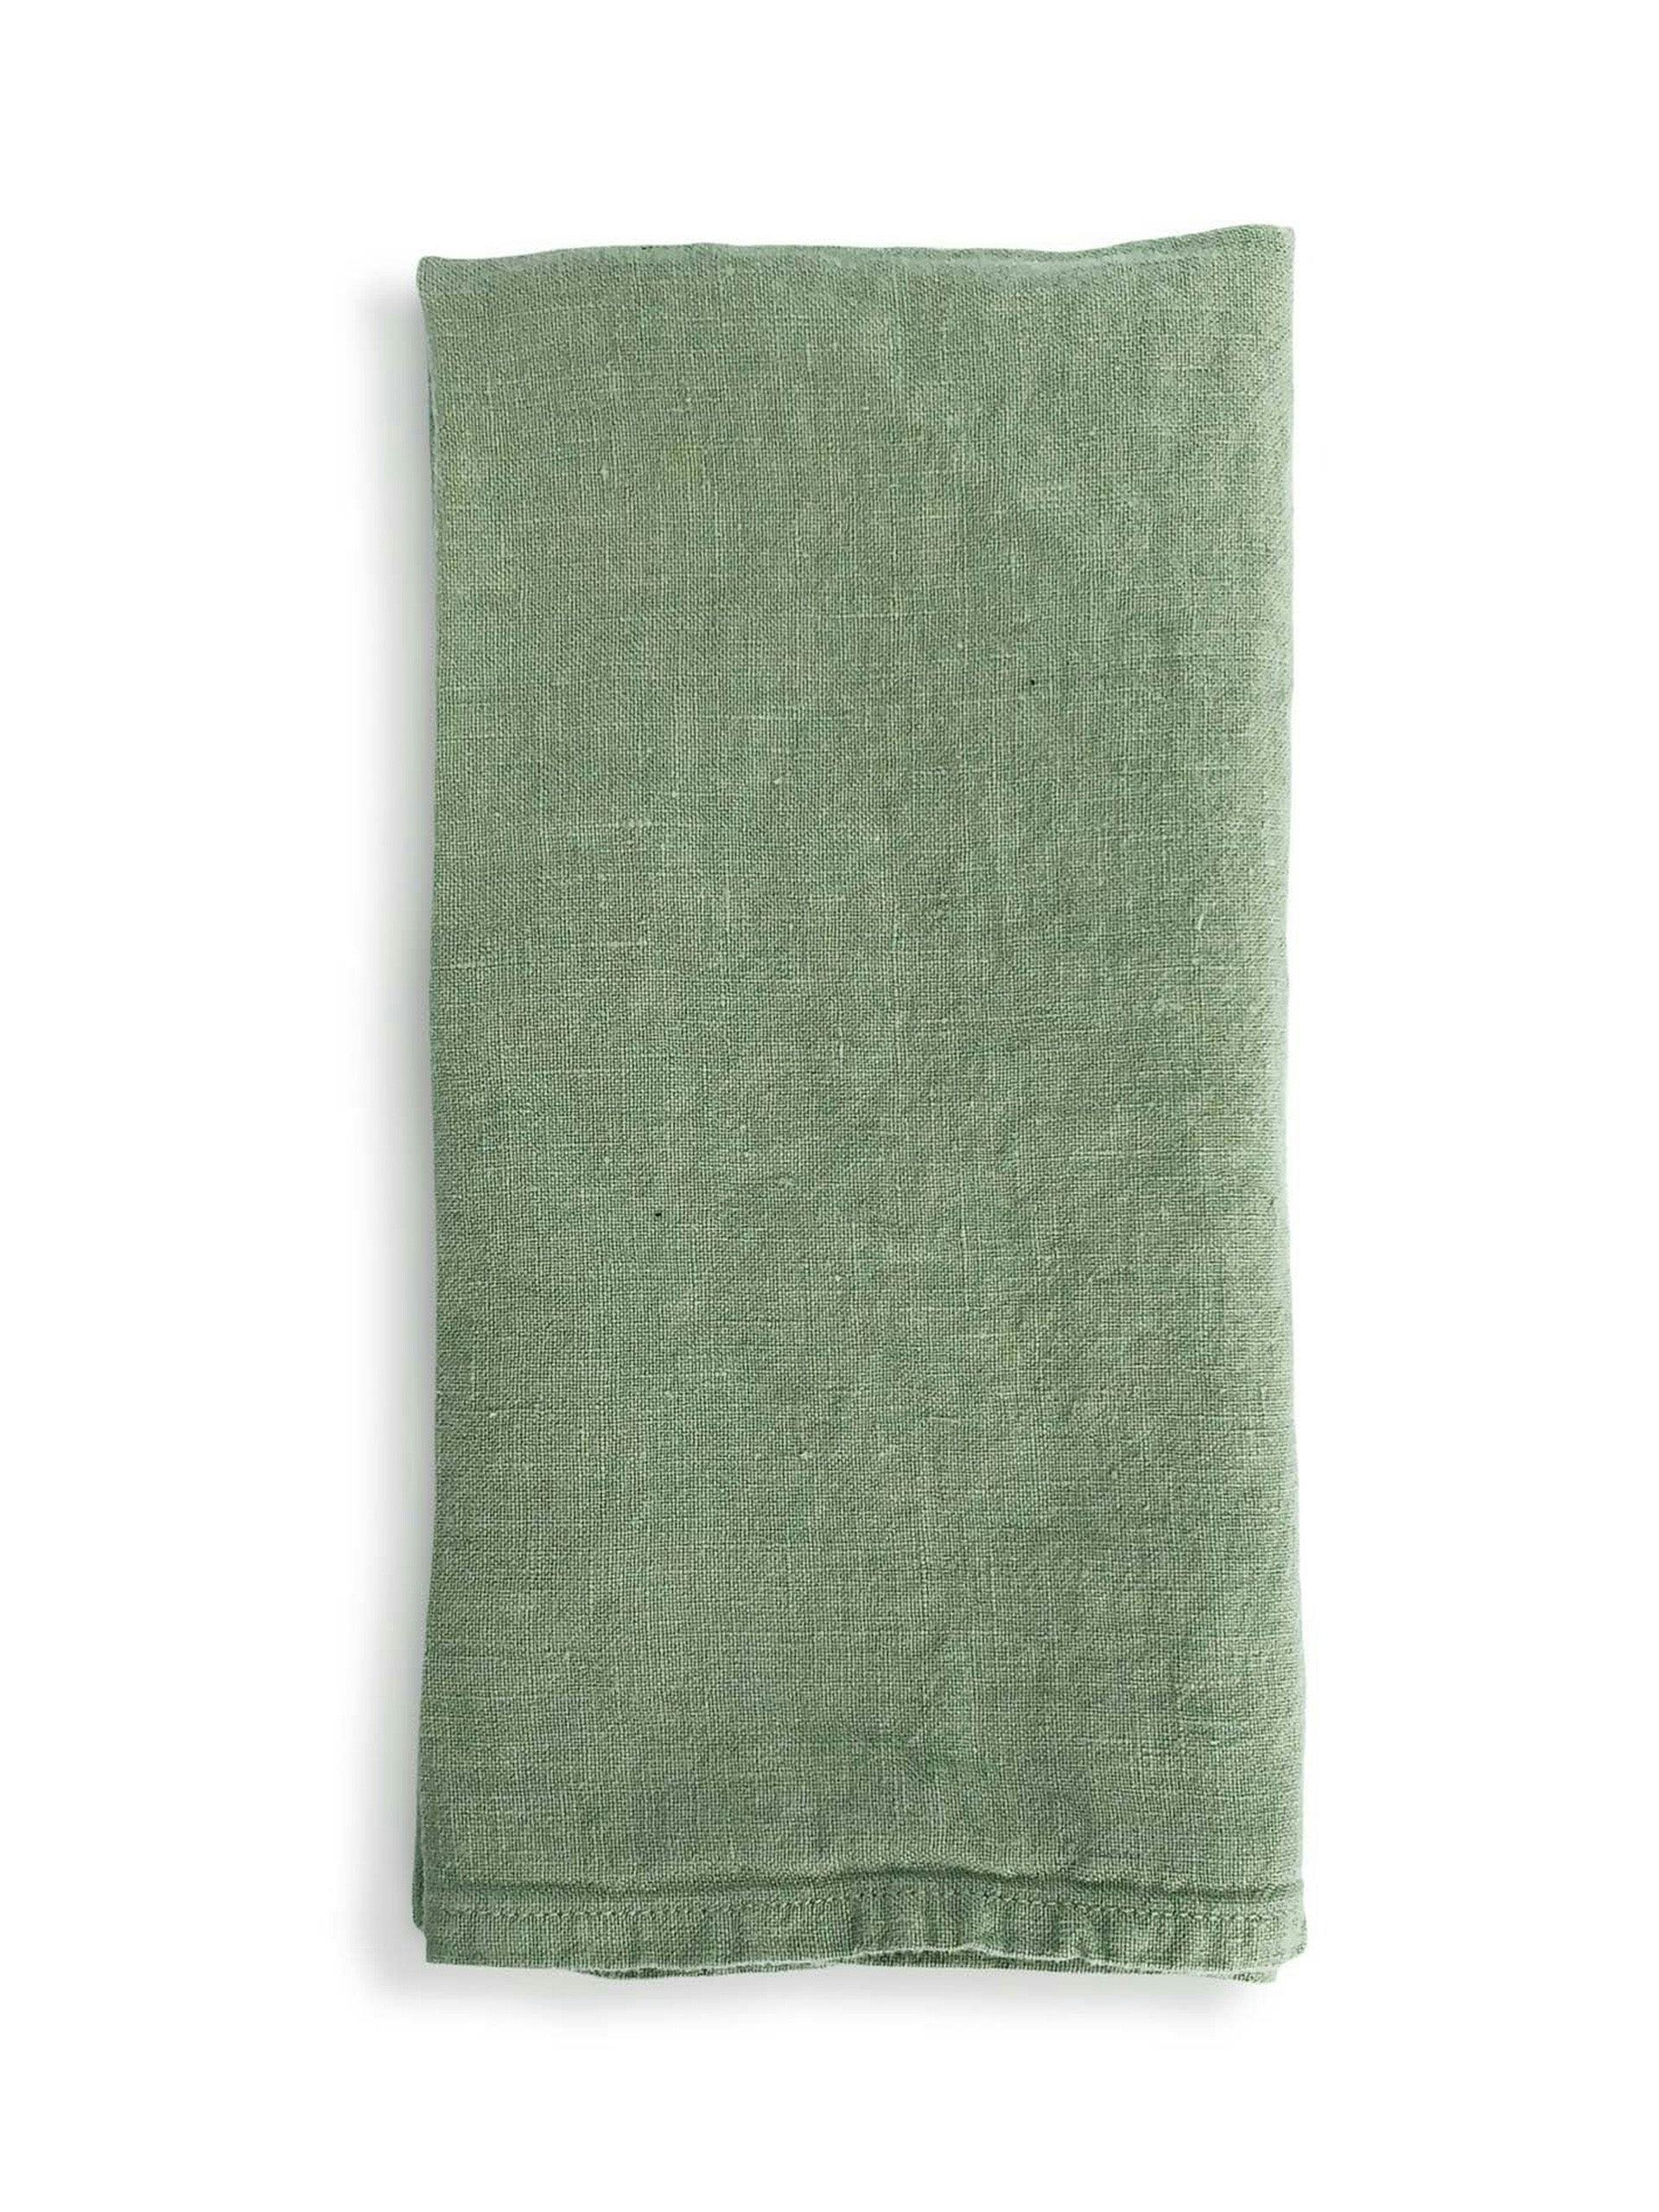 Spring Green linen napkin